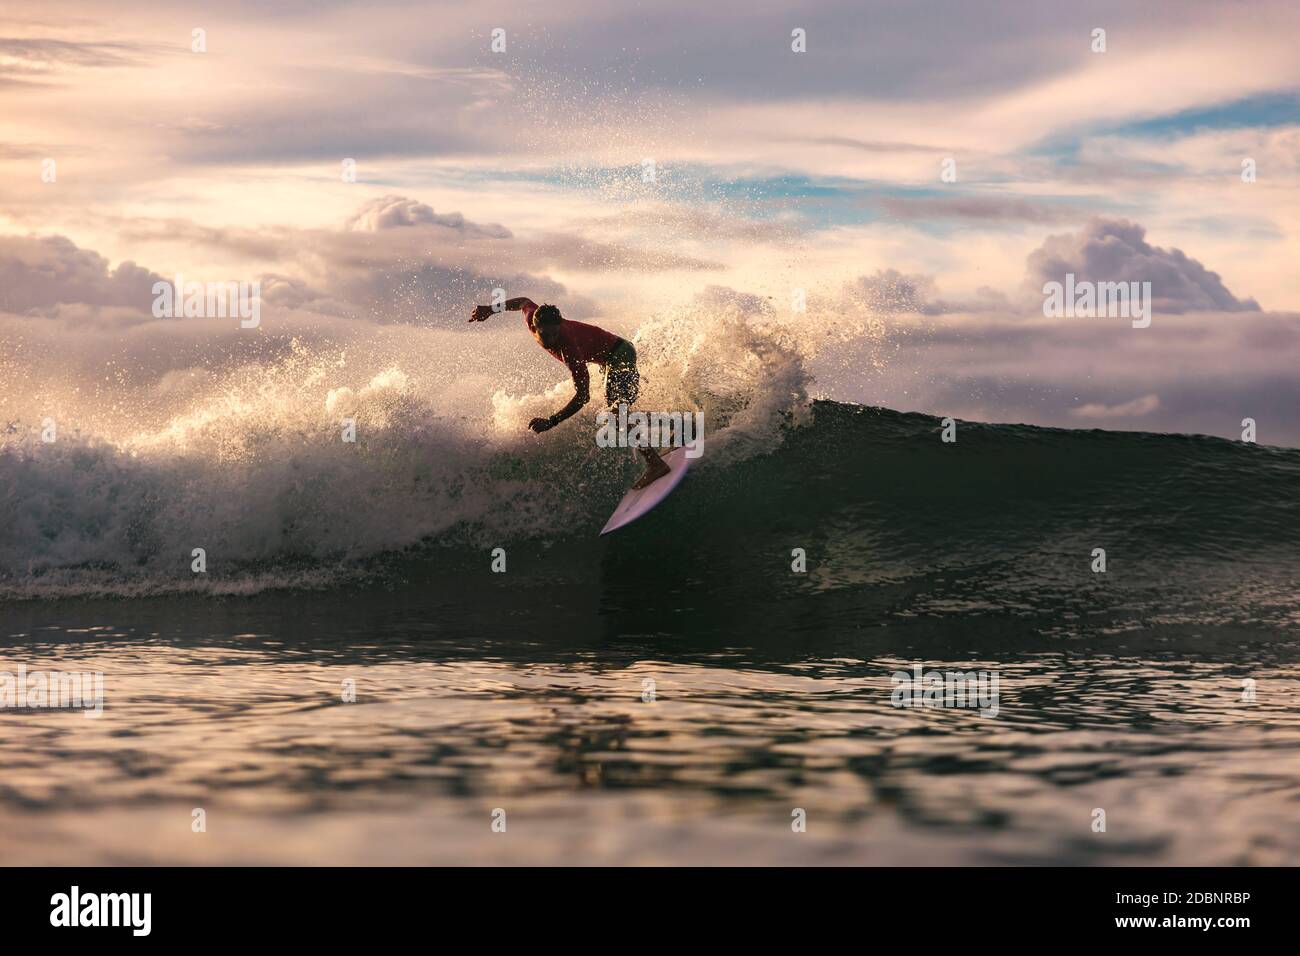 Surfer on wave, Sumbawa, Indonesia Stock Photo